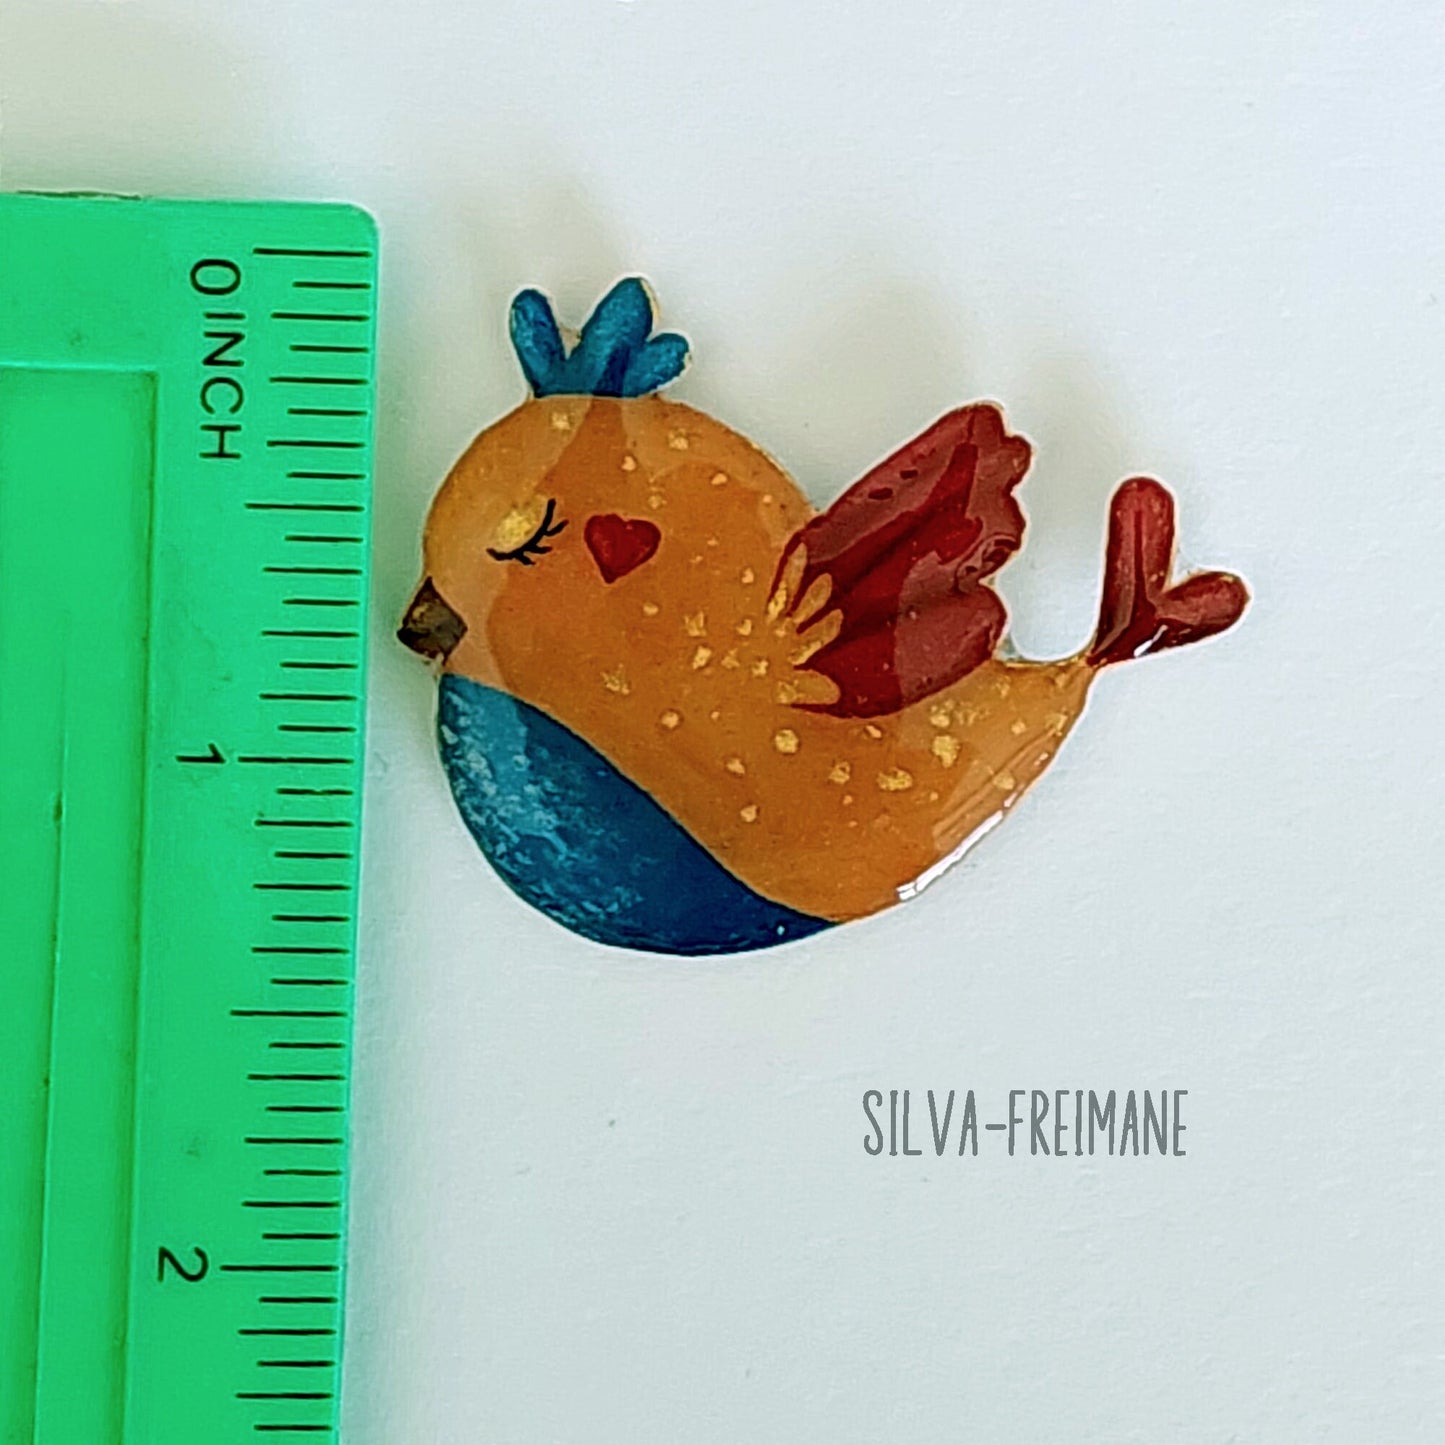 Handmade quirky bird pin